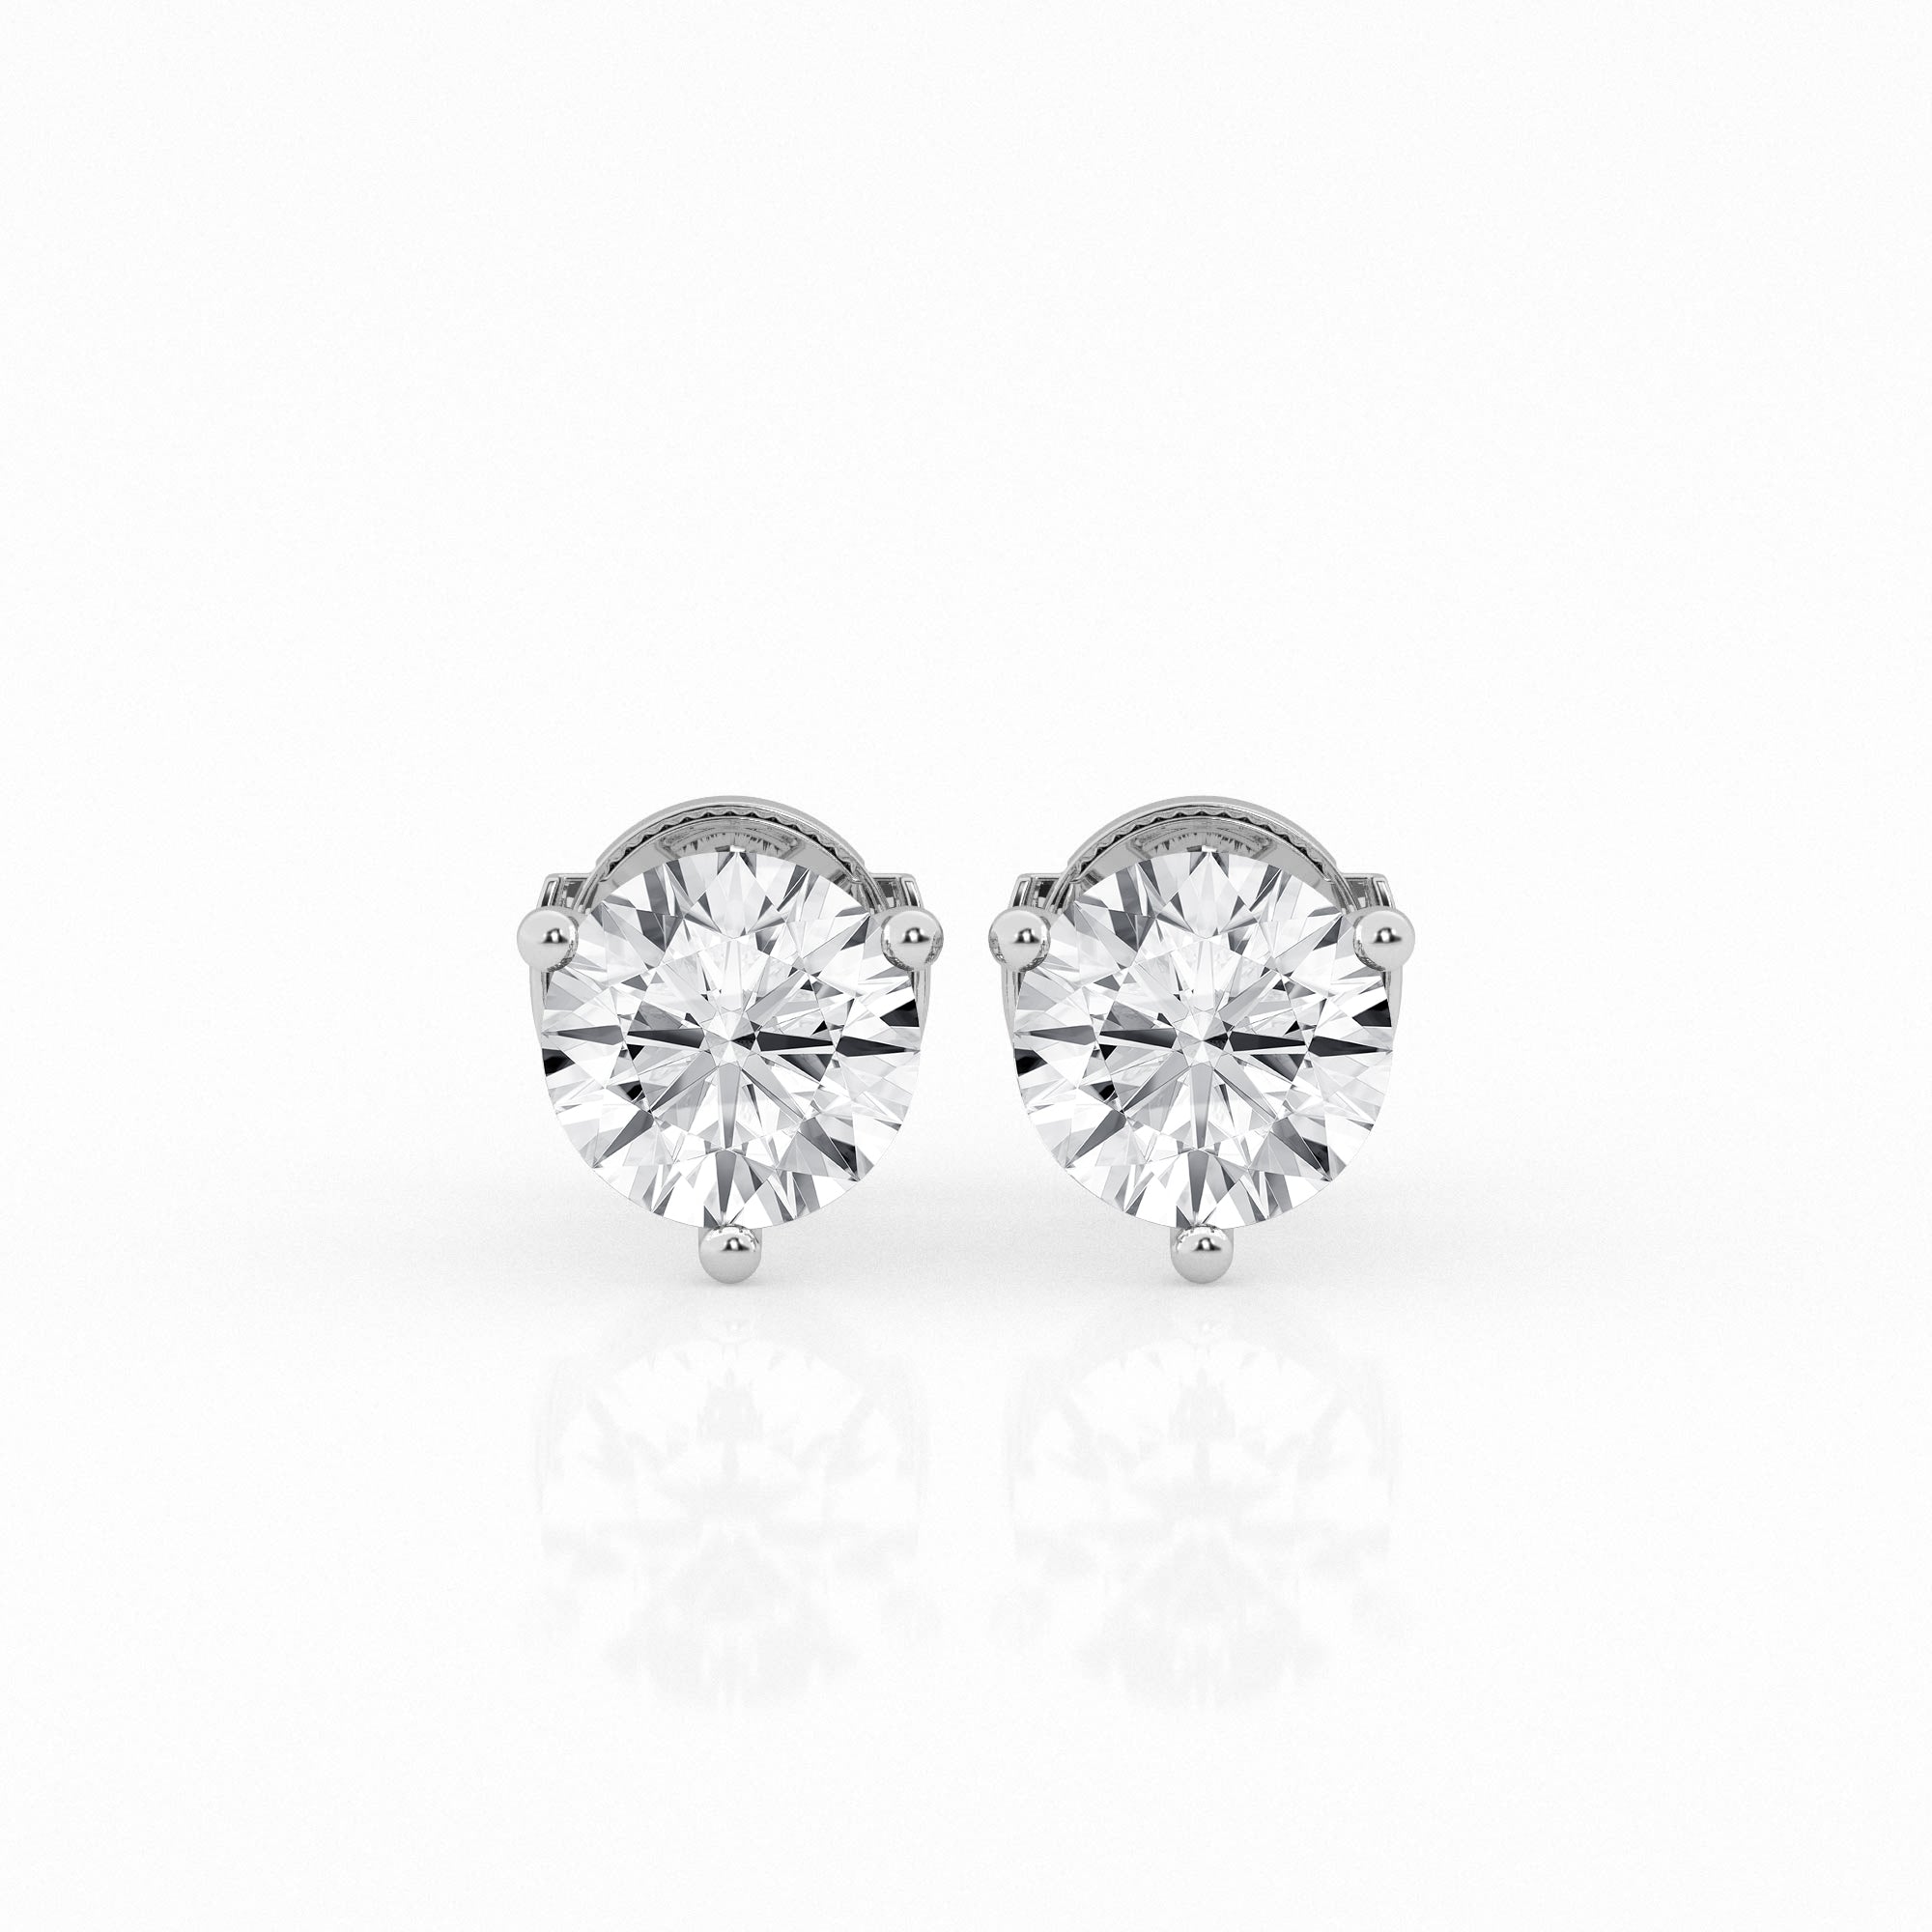 5 carat Round Diamond Earring Studs